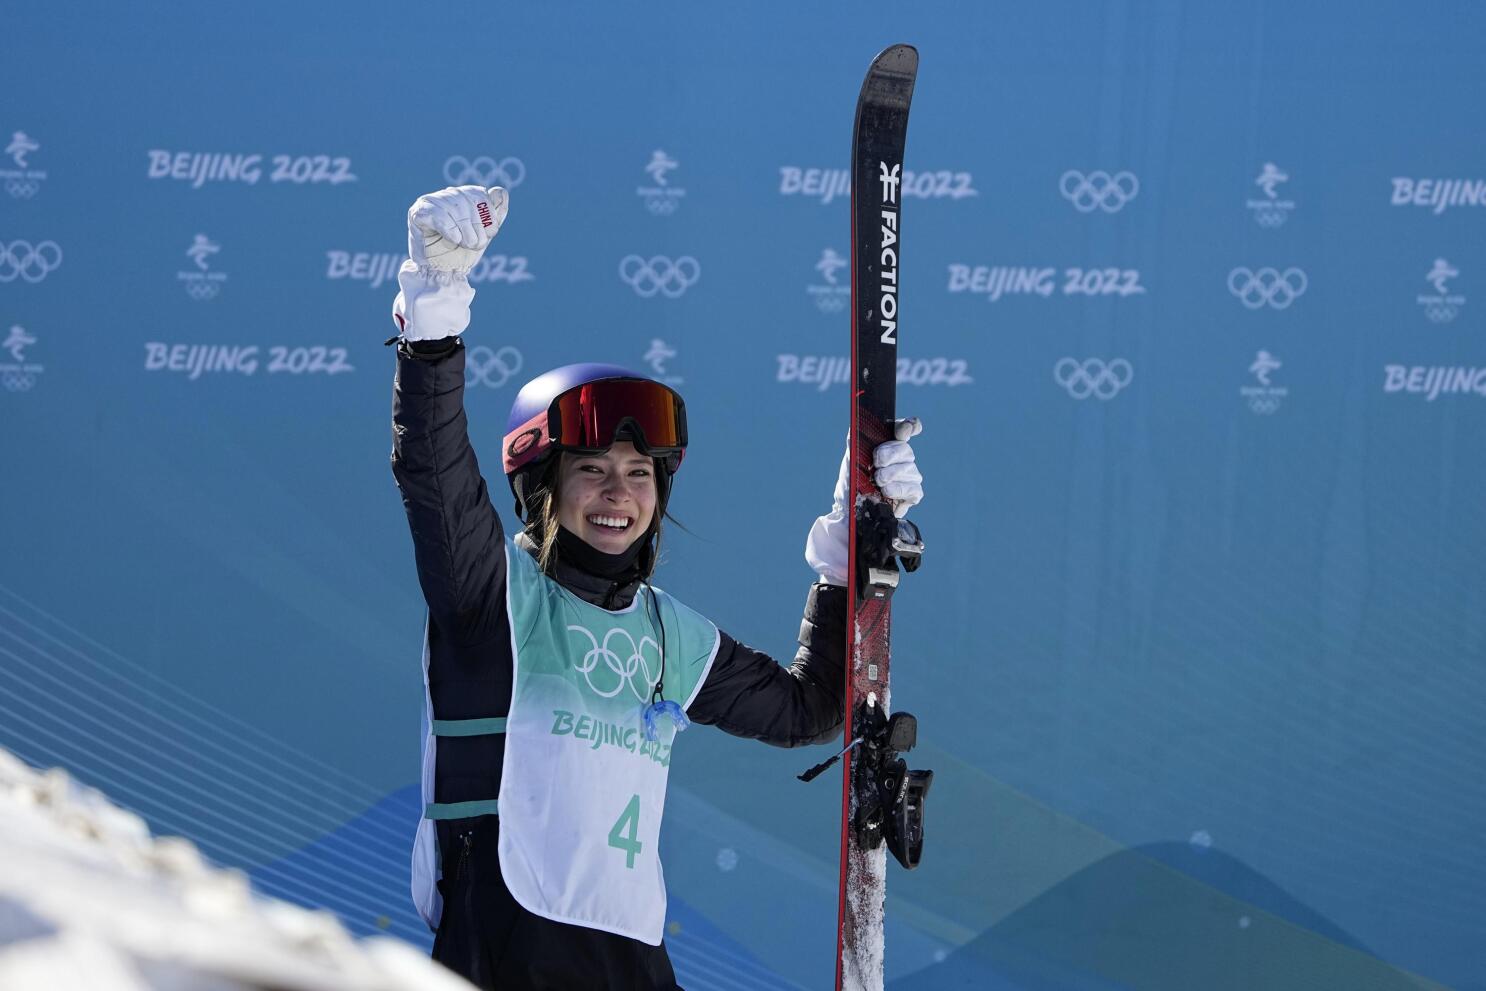 Ski champion Eileen Gu makes a wintery debut in this Louis Vuitton campaign